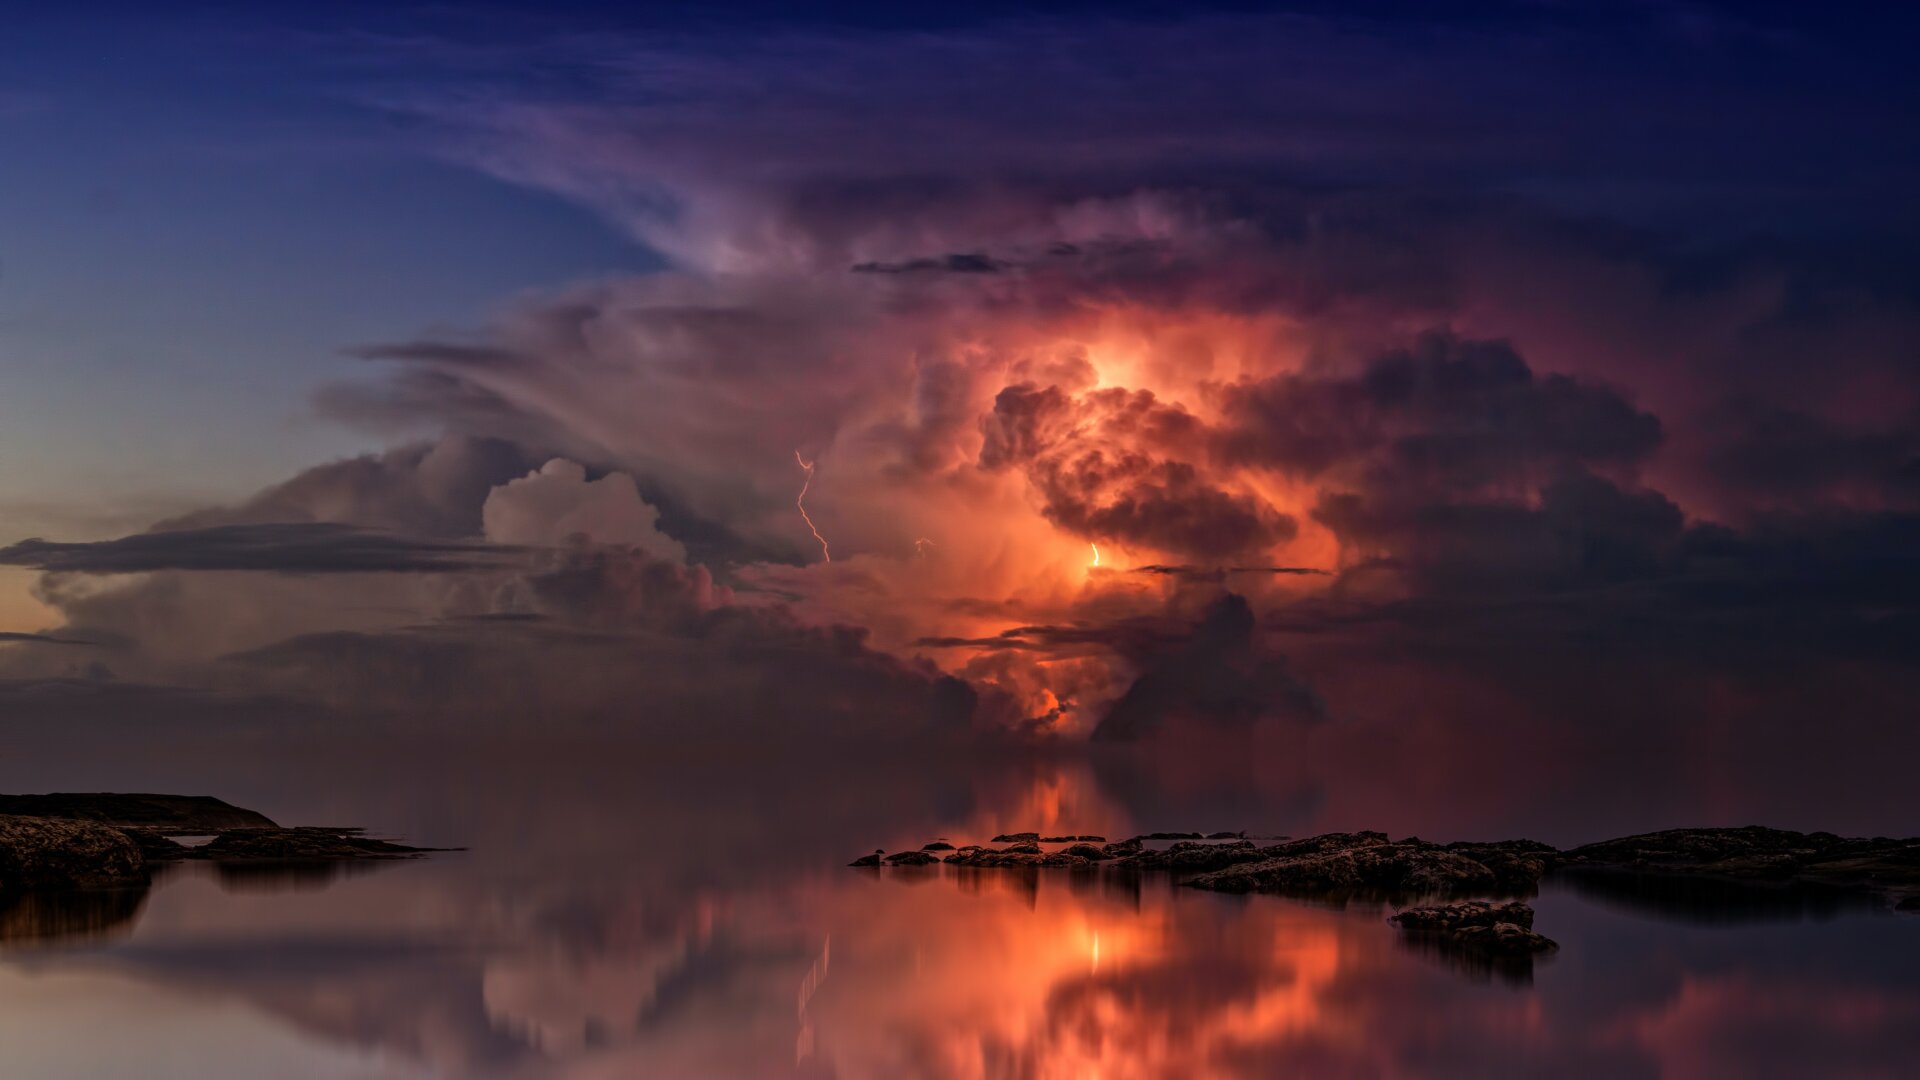 Dreams about Storms – Meaning, Interpretation & Symbolism